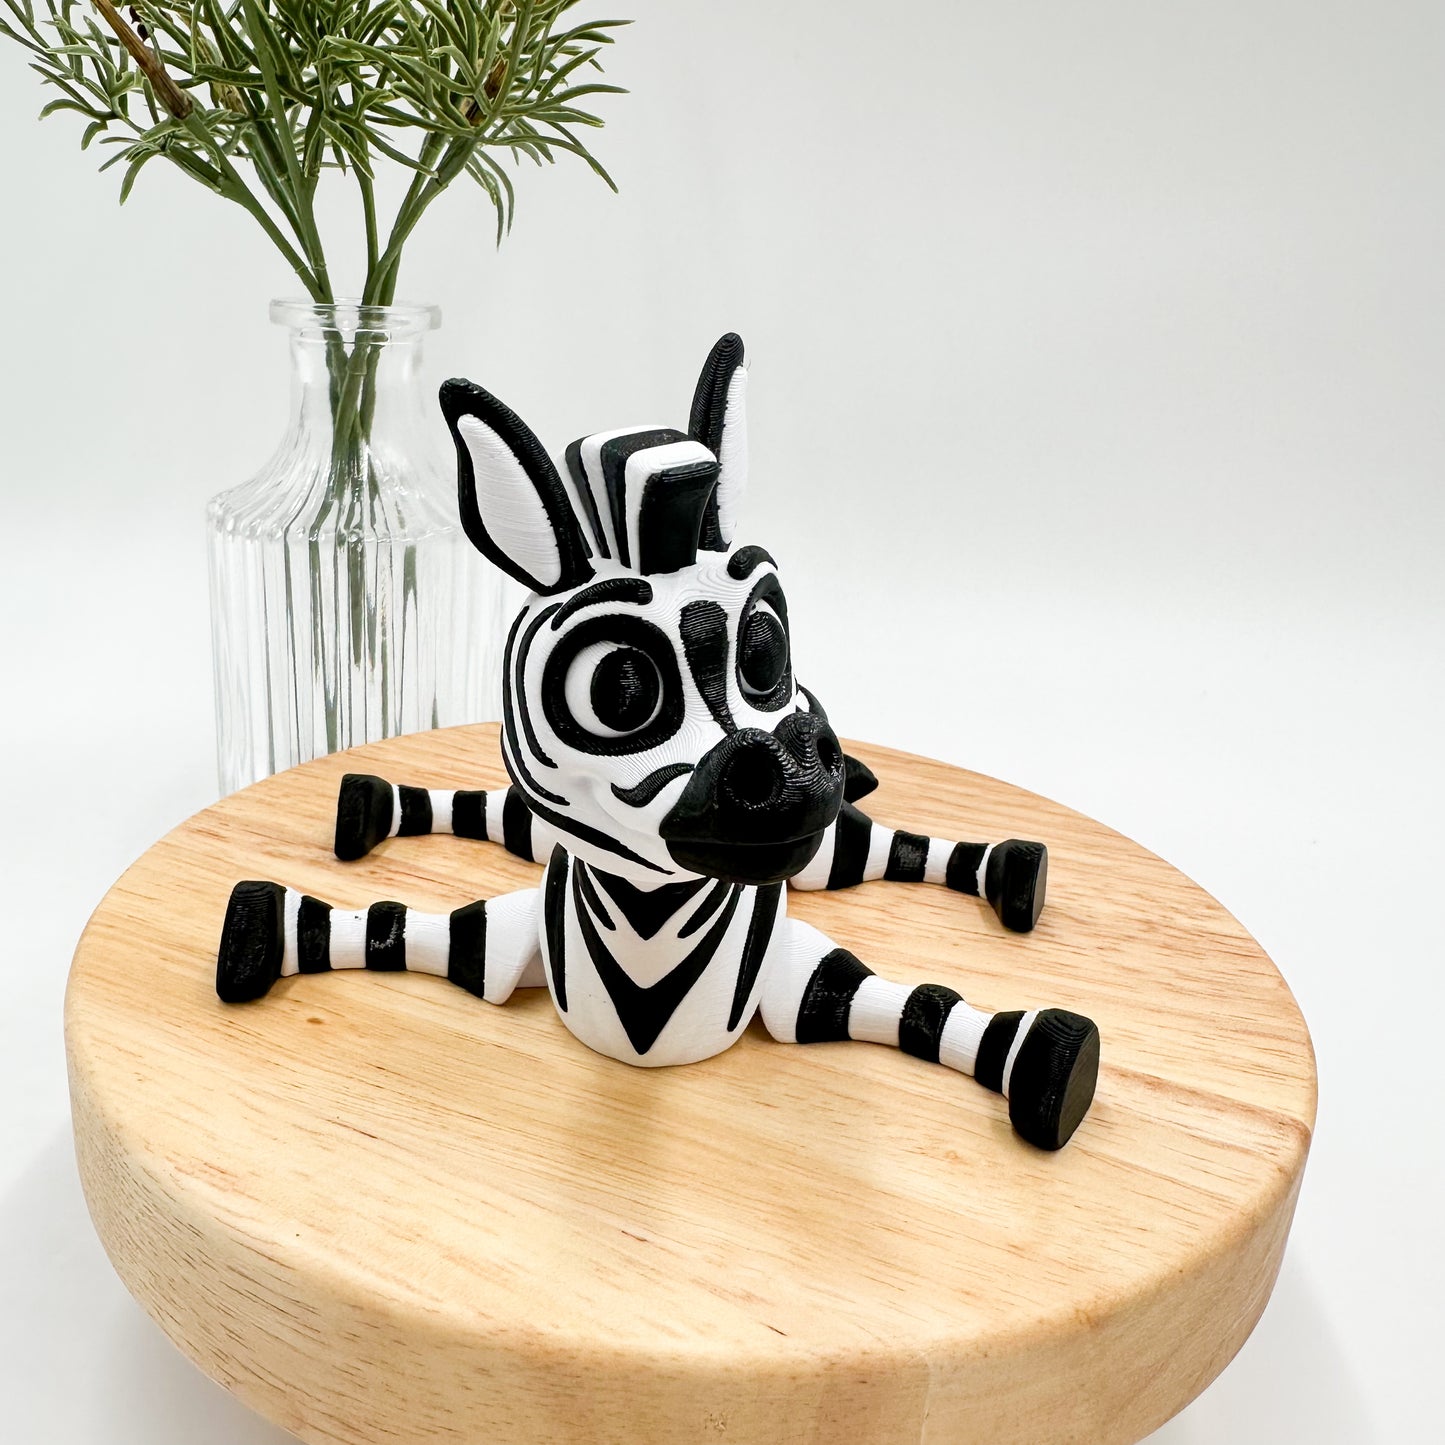 3D Printed Baby Zebra